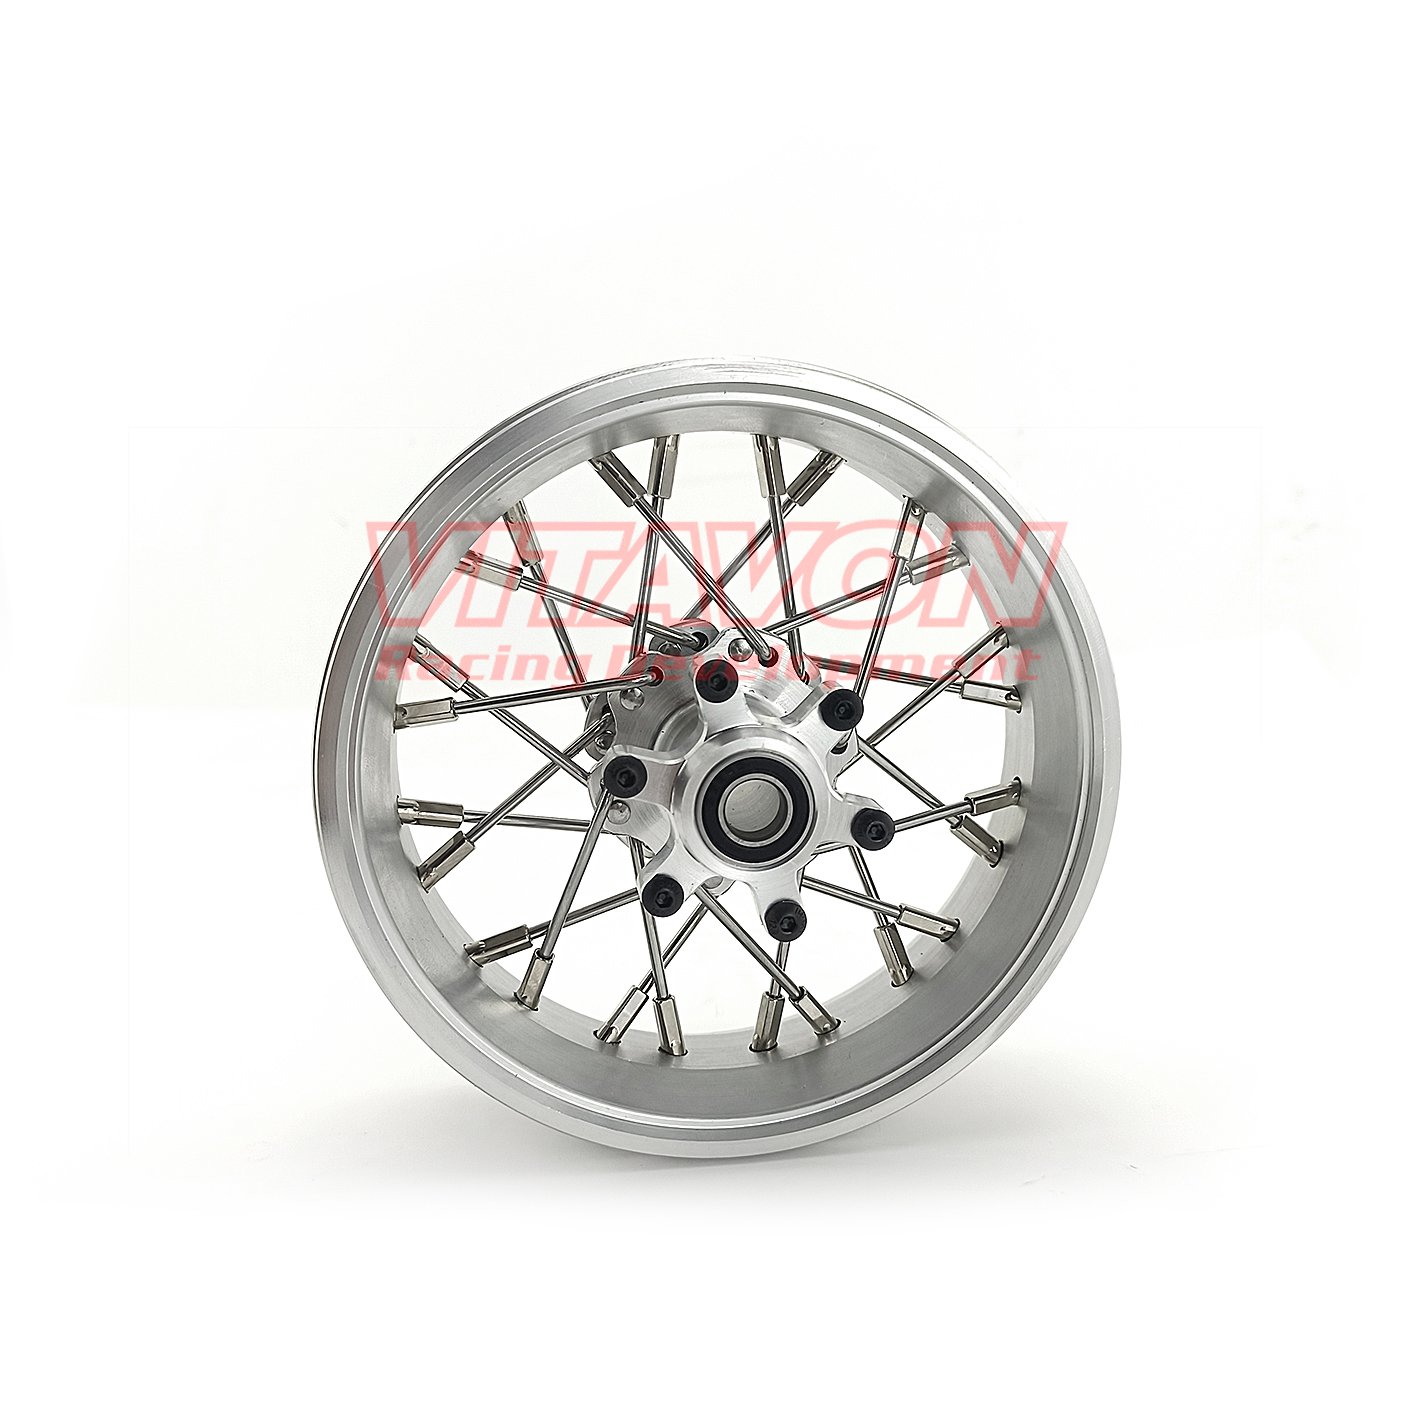 VITAVON CNC Aluminum Rear Spoke Wheel For Losi Promoto MX Bike